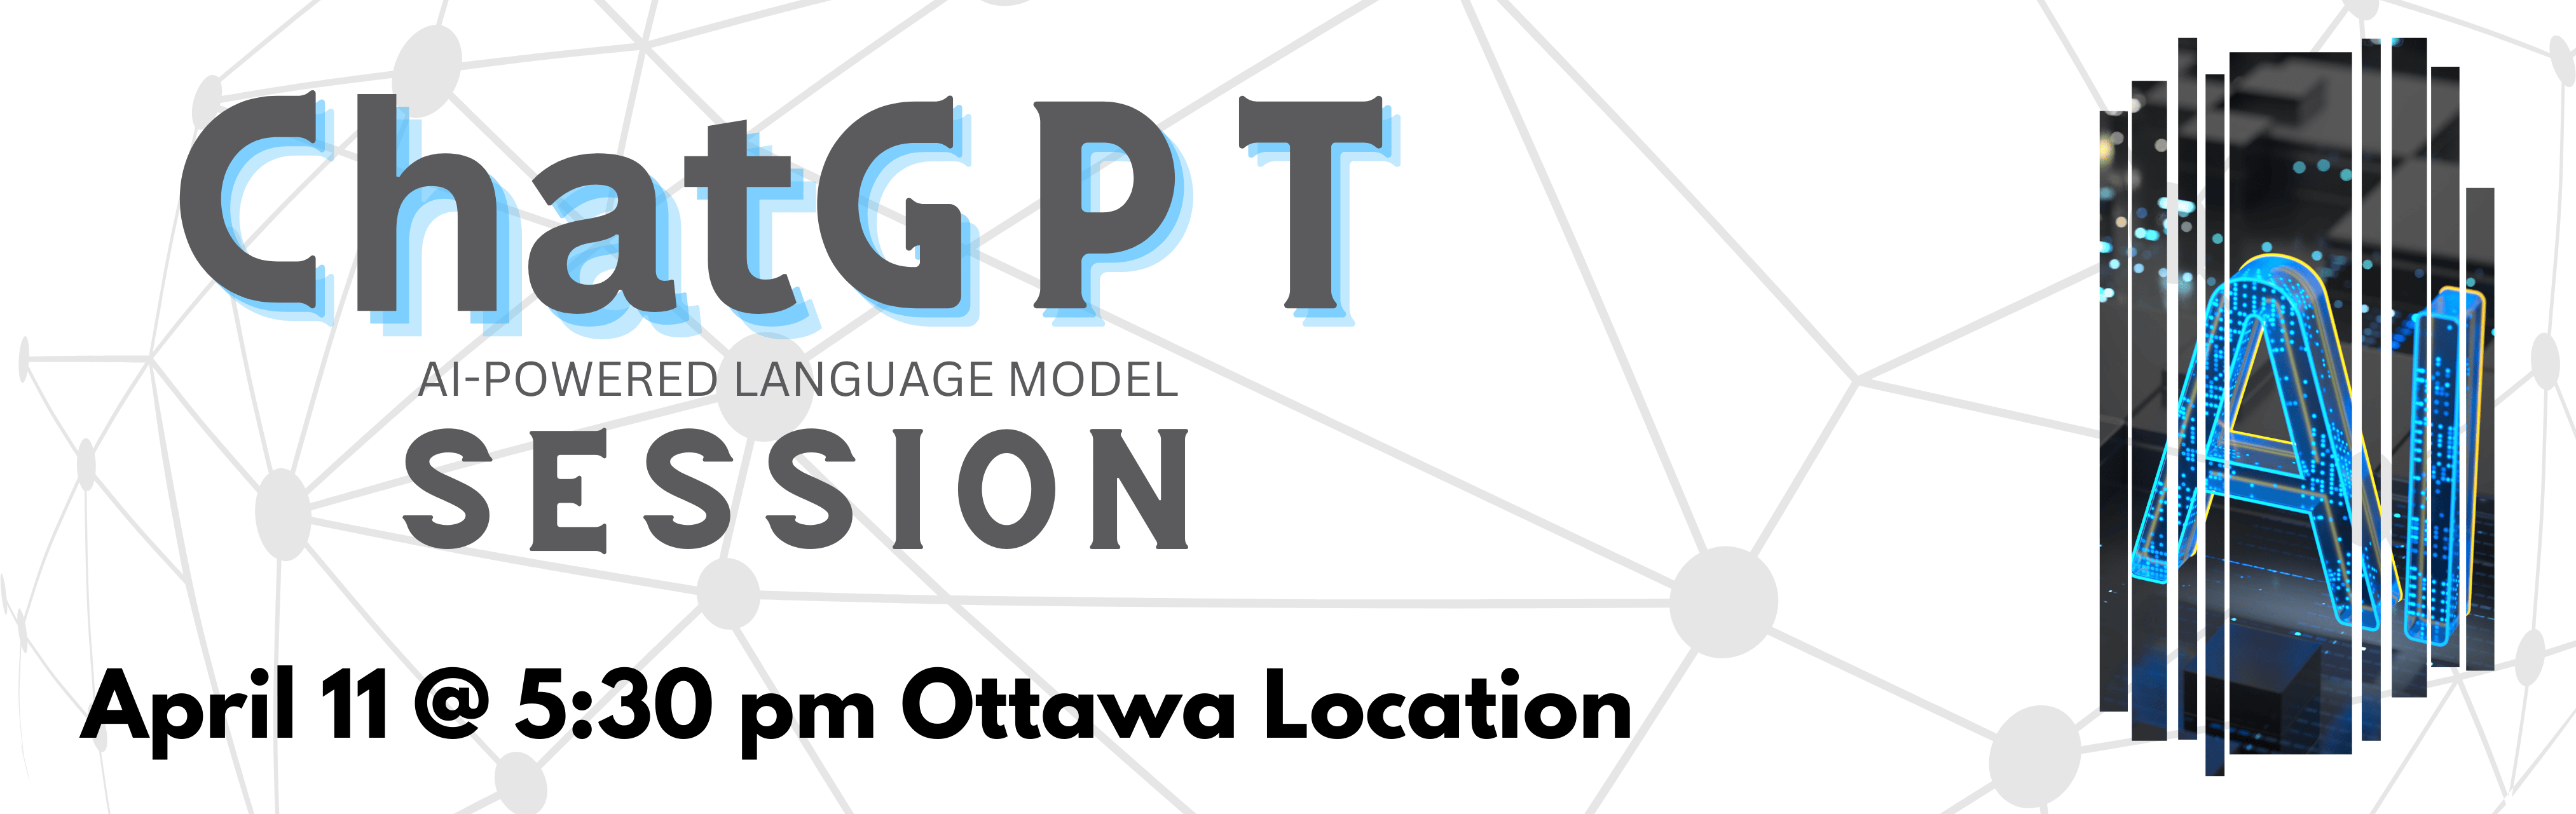 Chat GPT AI powered language model session April 11 5:30 pm Ottawa Location